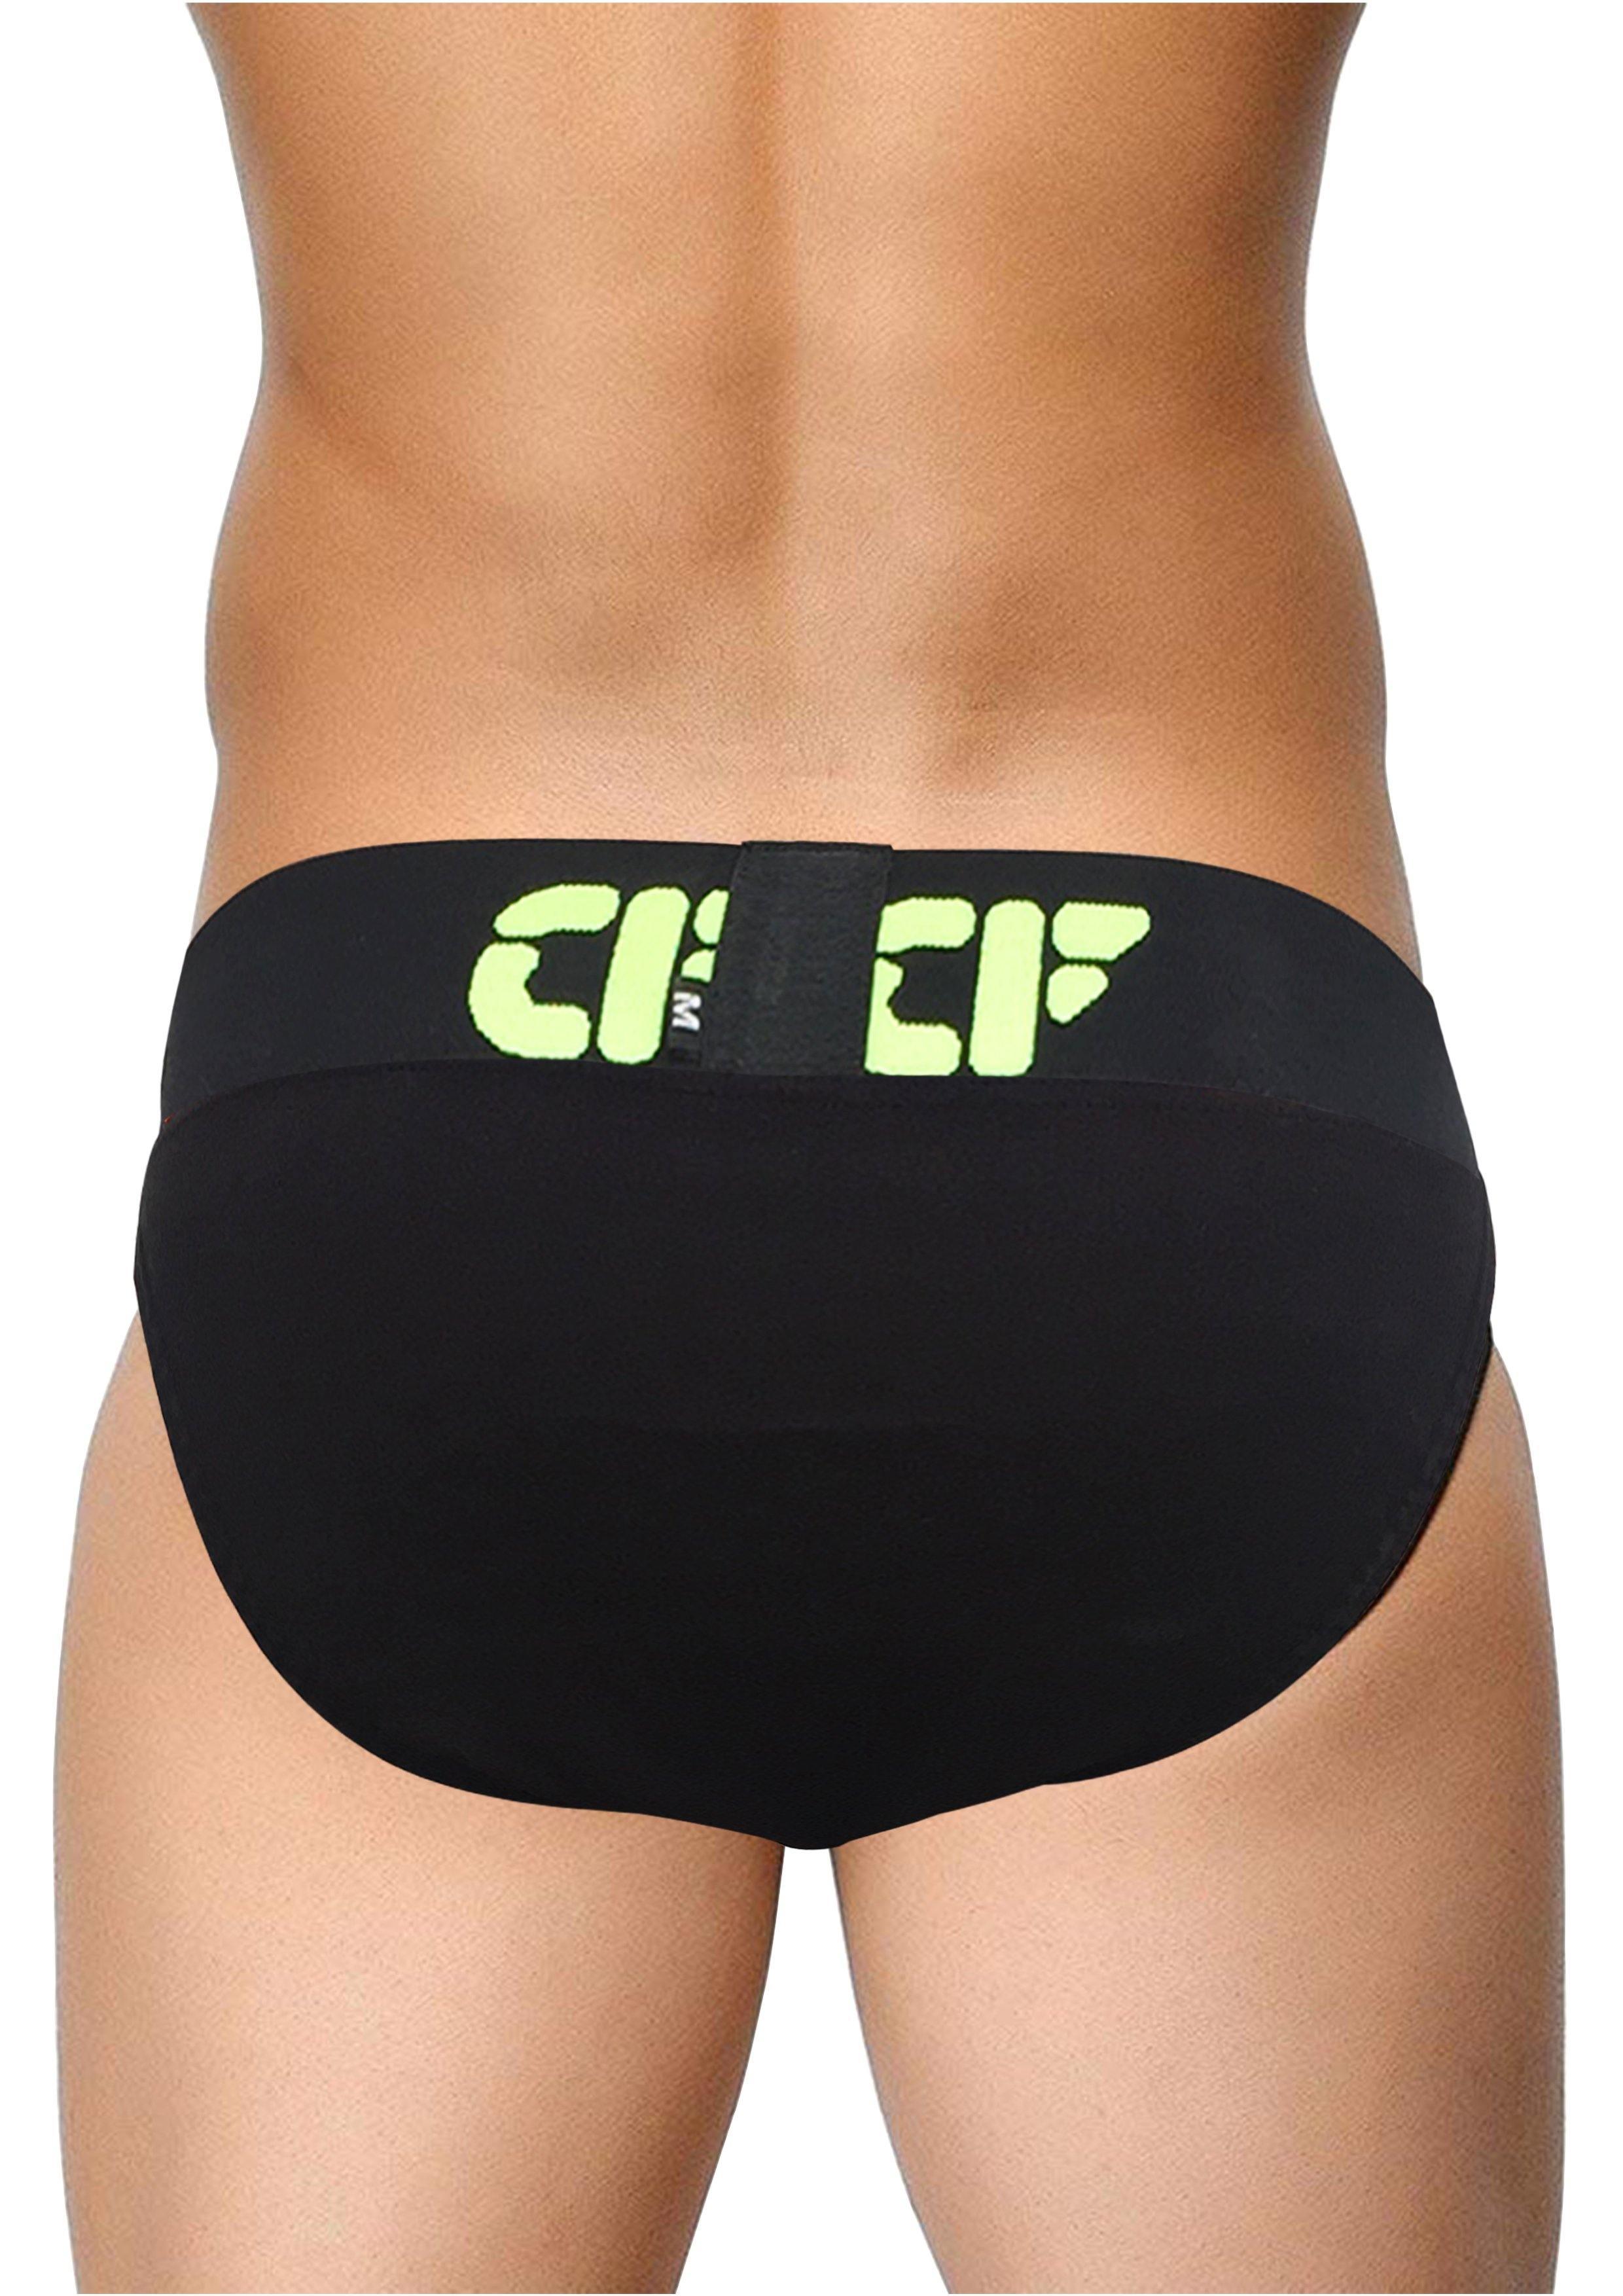 OPTIMUM GALLERY Fitness Fighter Frenchie Gym Supporter Underwear